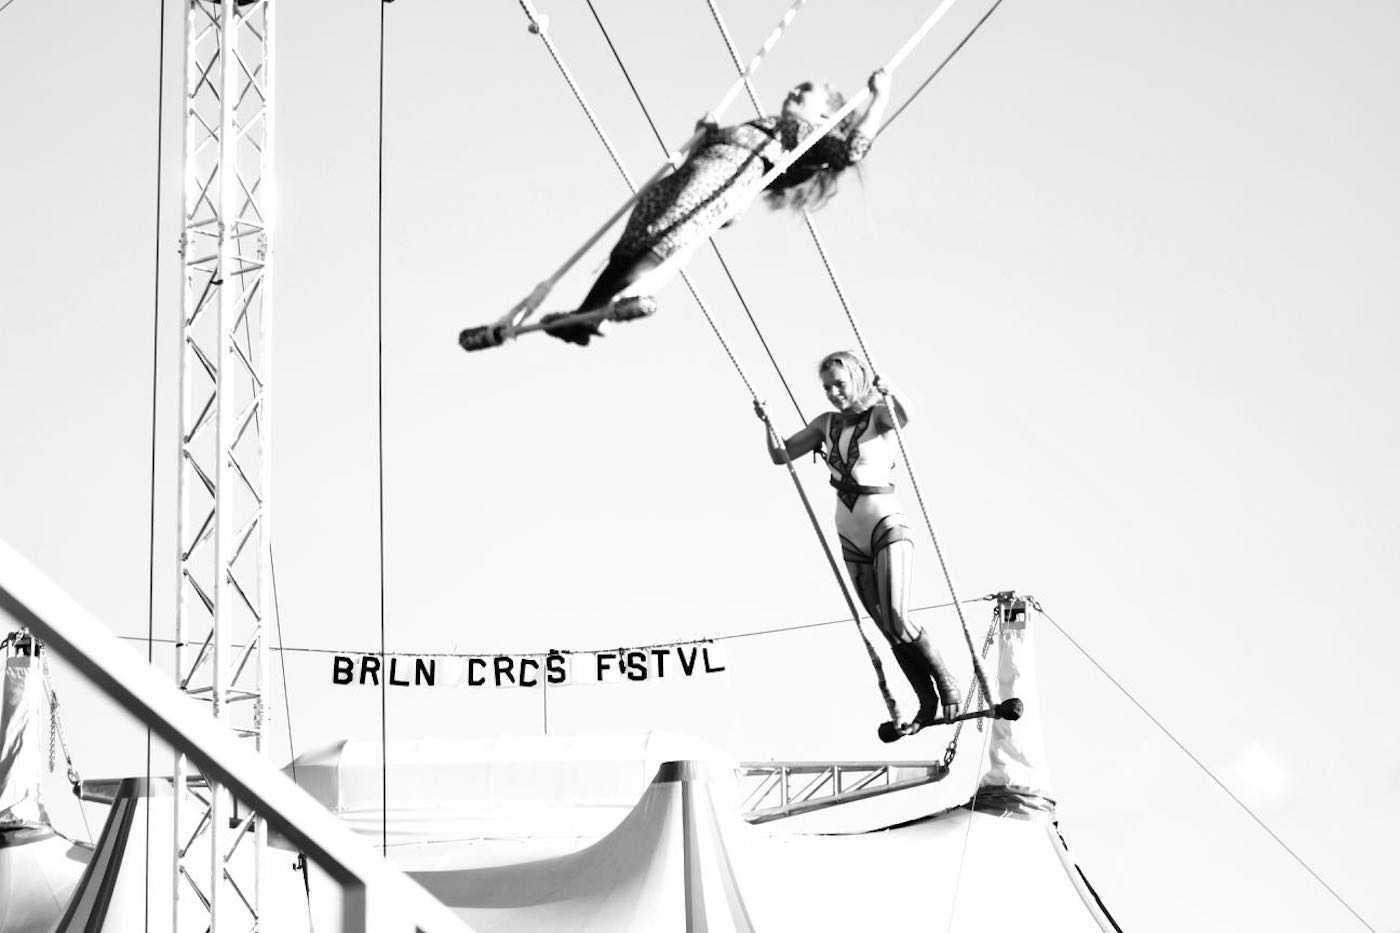 Berlin Circus Festival Für Familien Mit Kindern In Berlin // Himbeer